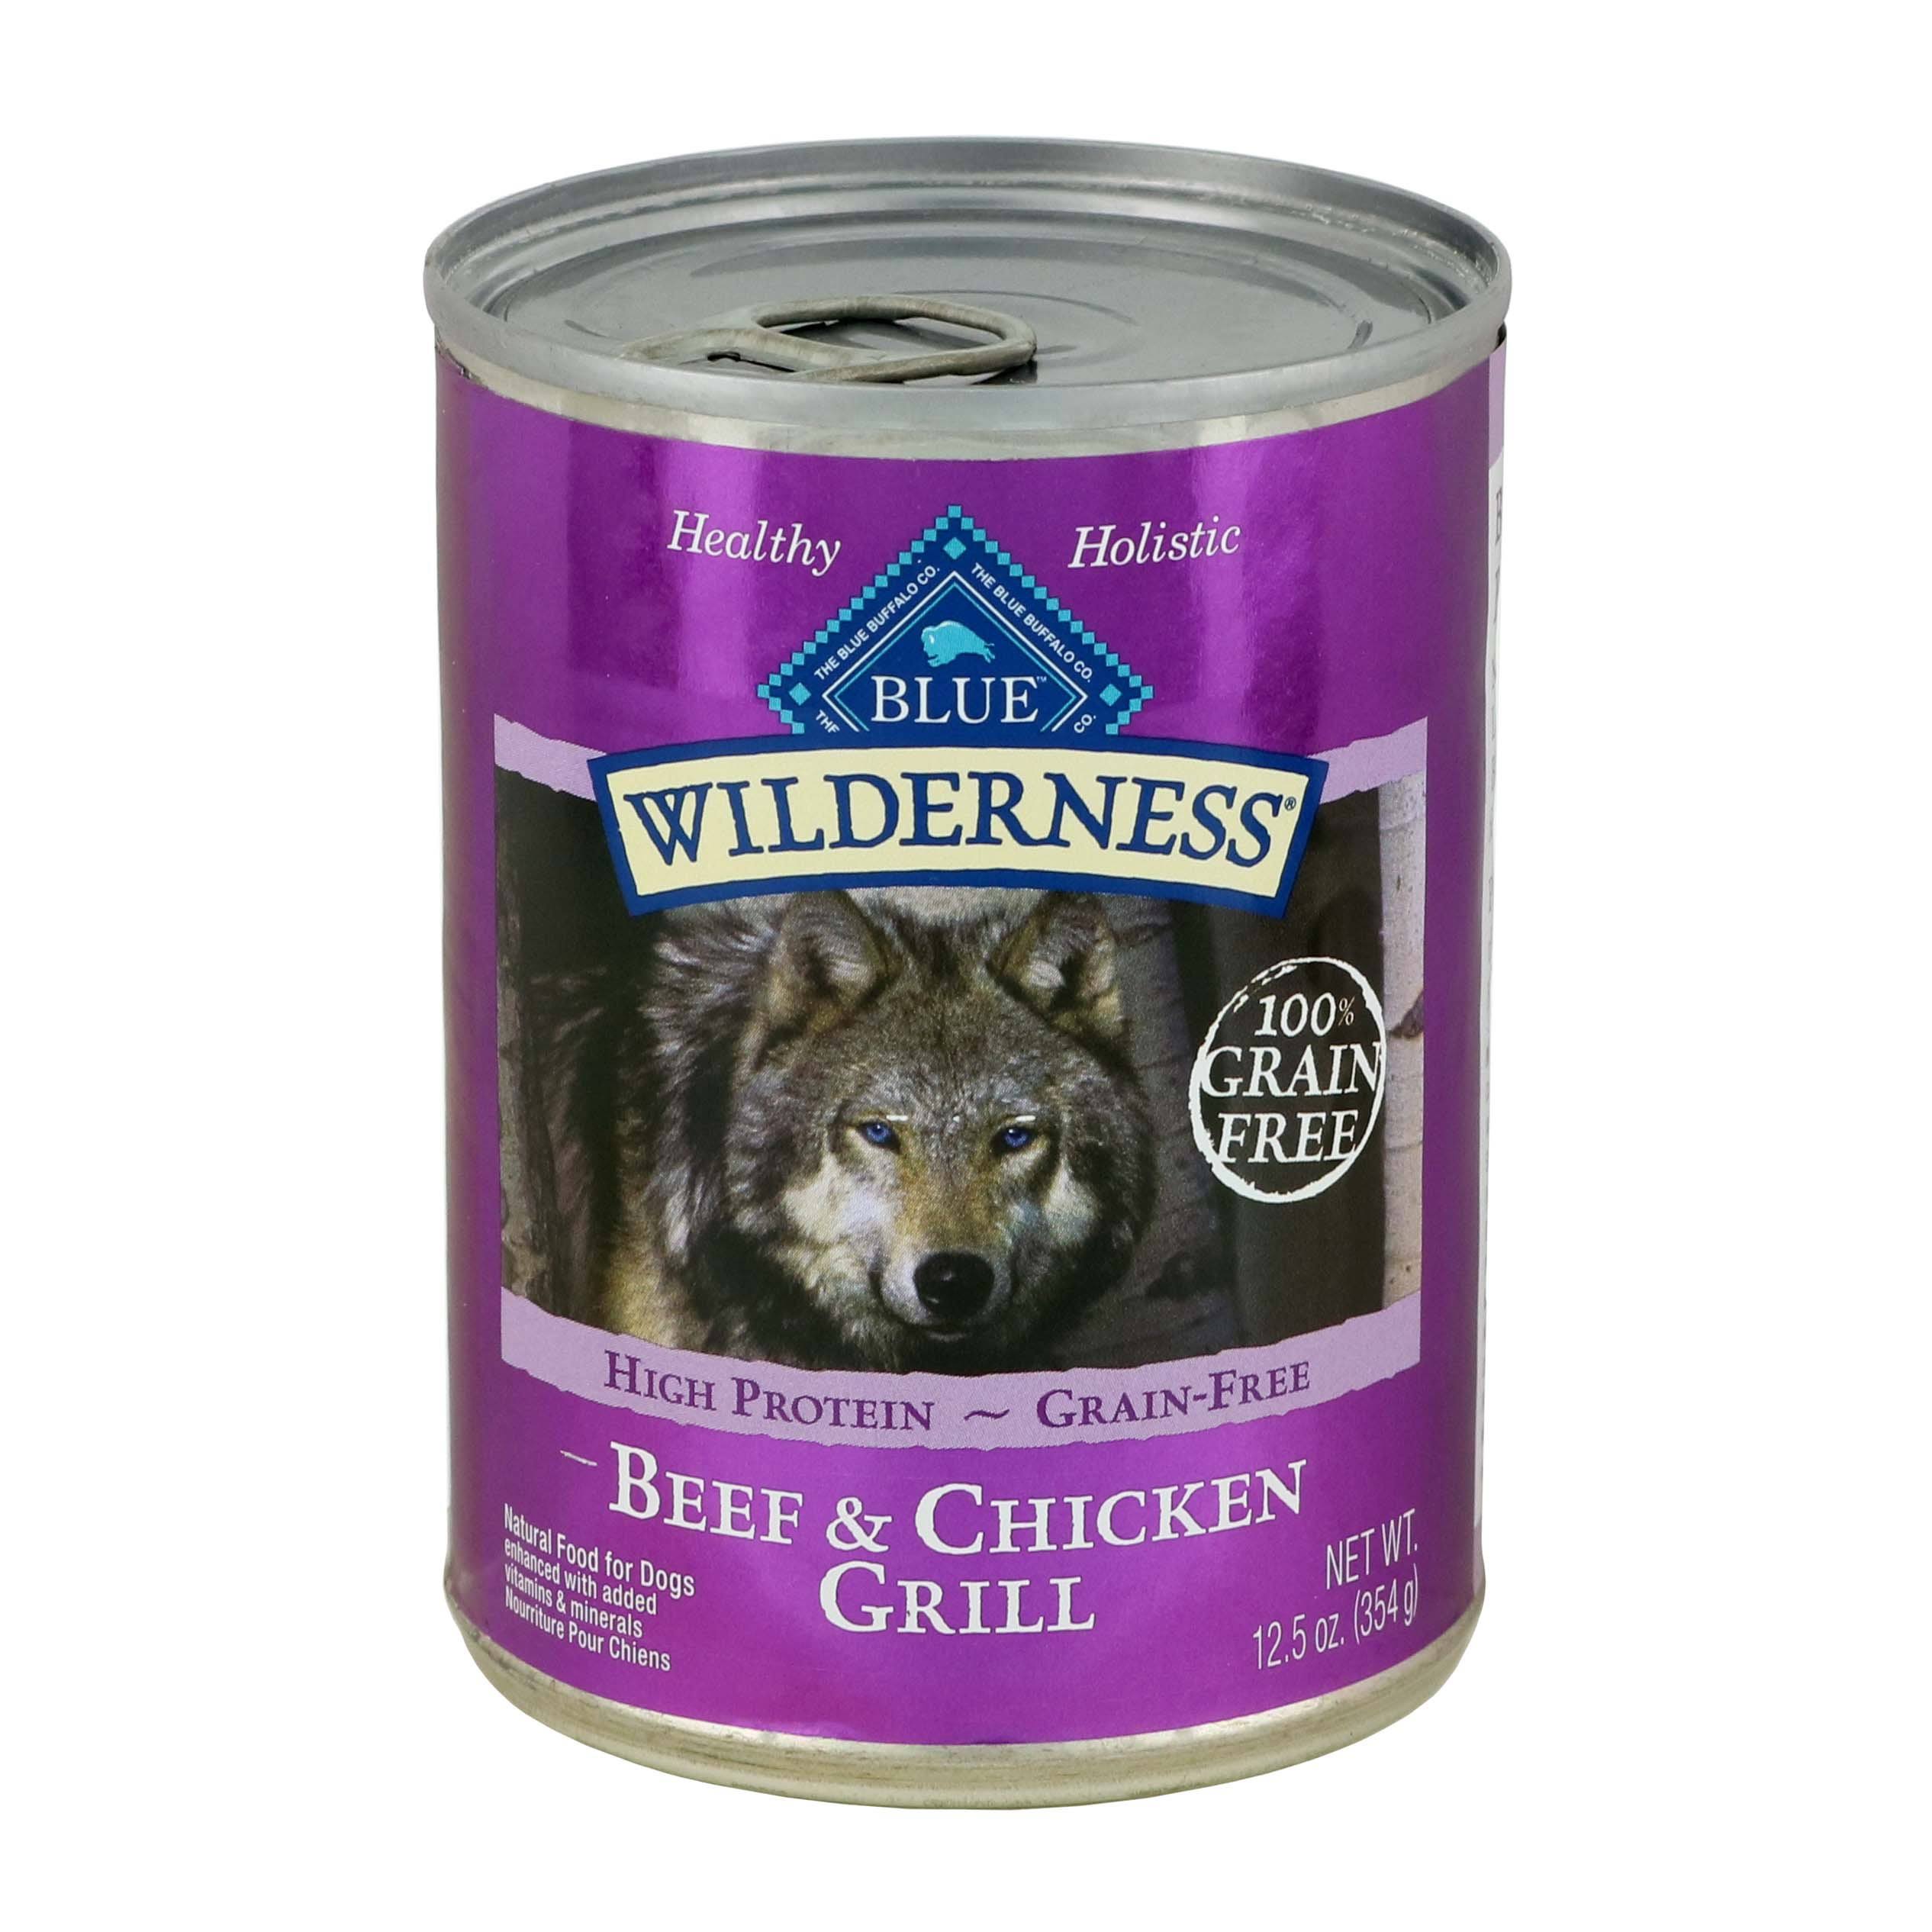 Blue Buffalo Wilderness Grain-Free Canned Dog Food - Beef & Chicken Grill, 12.5oz